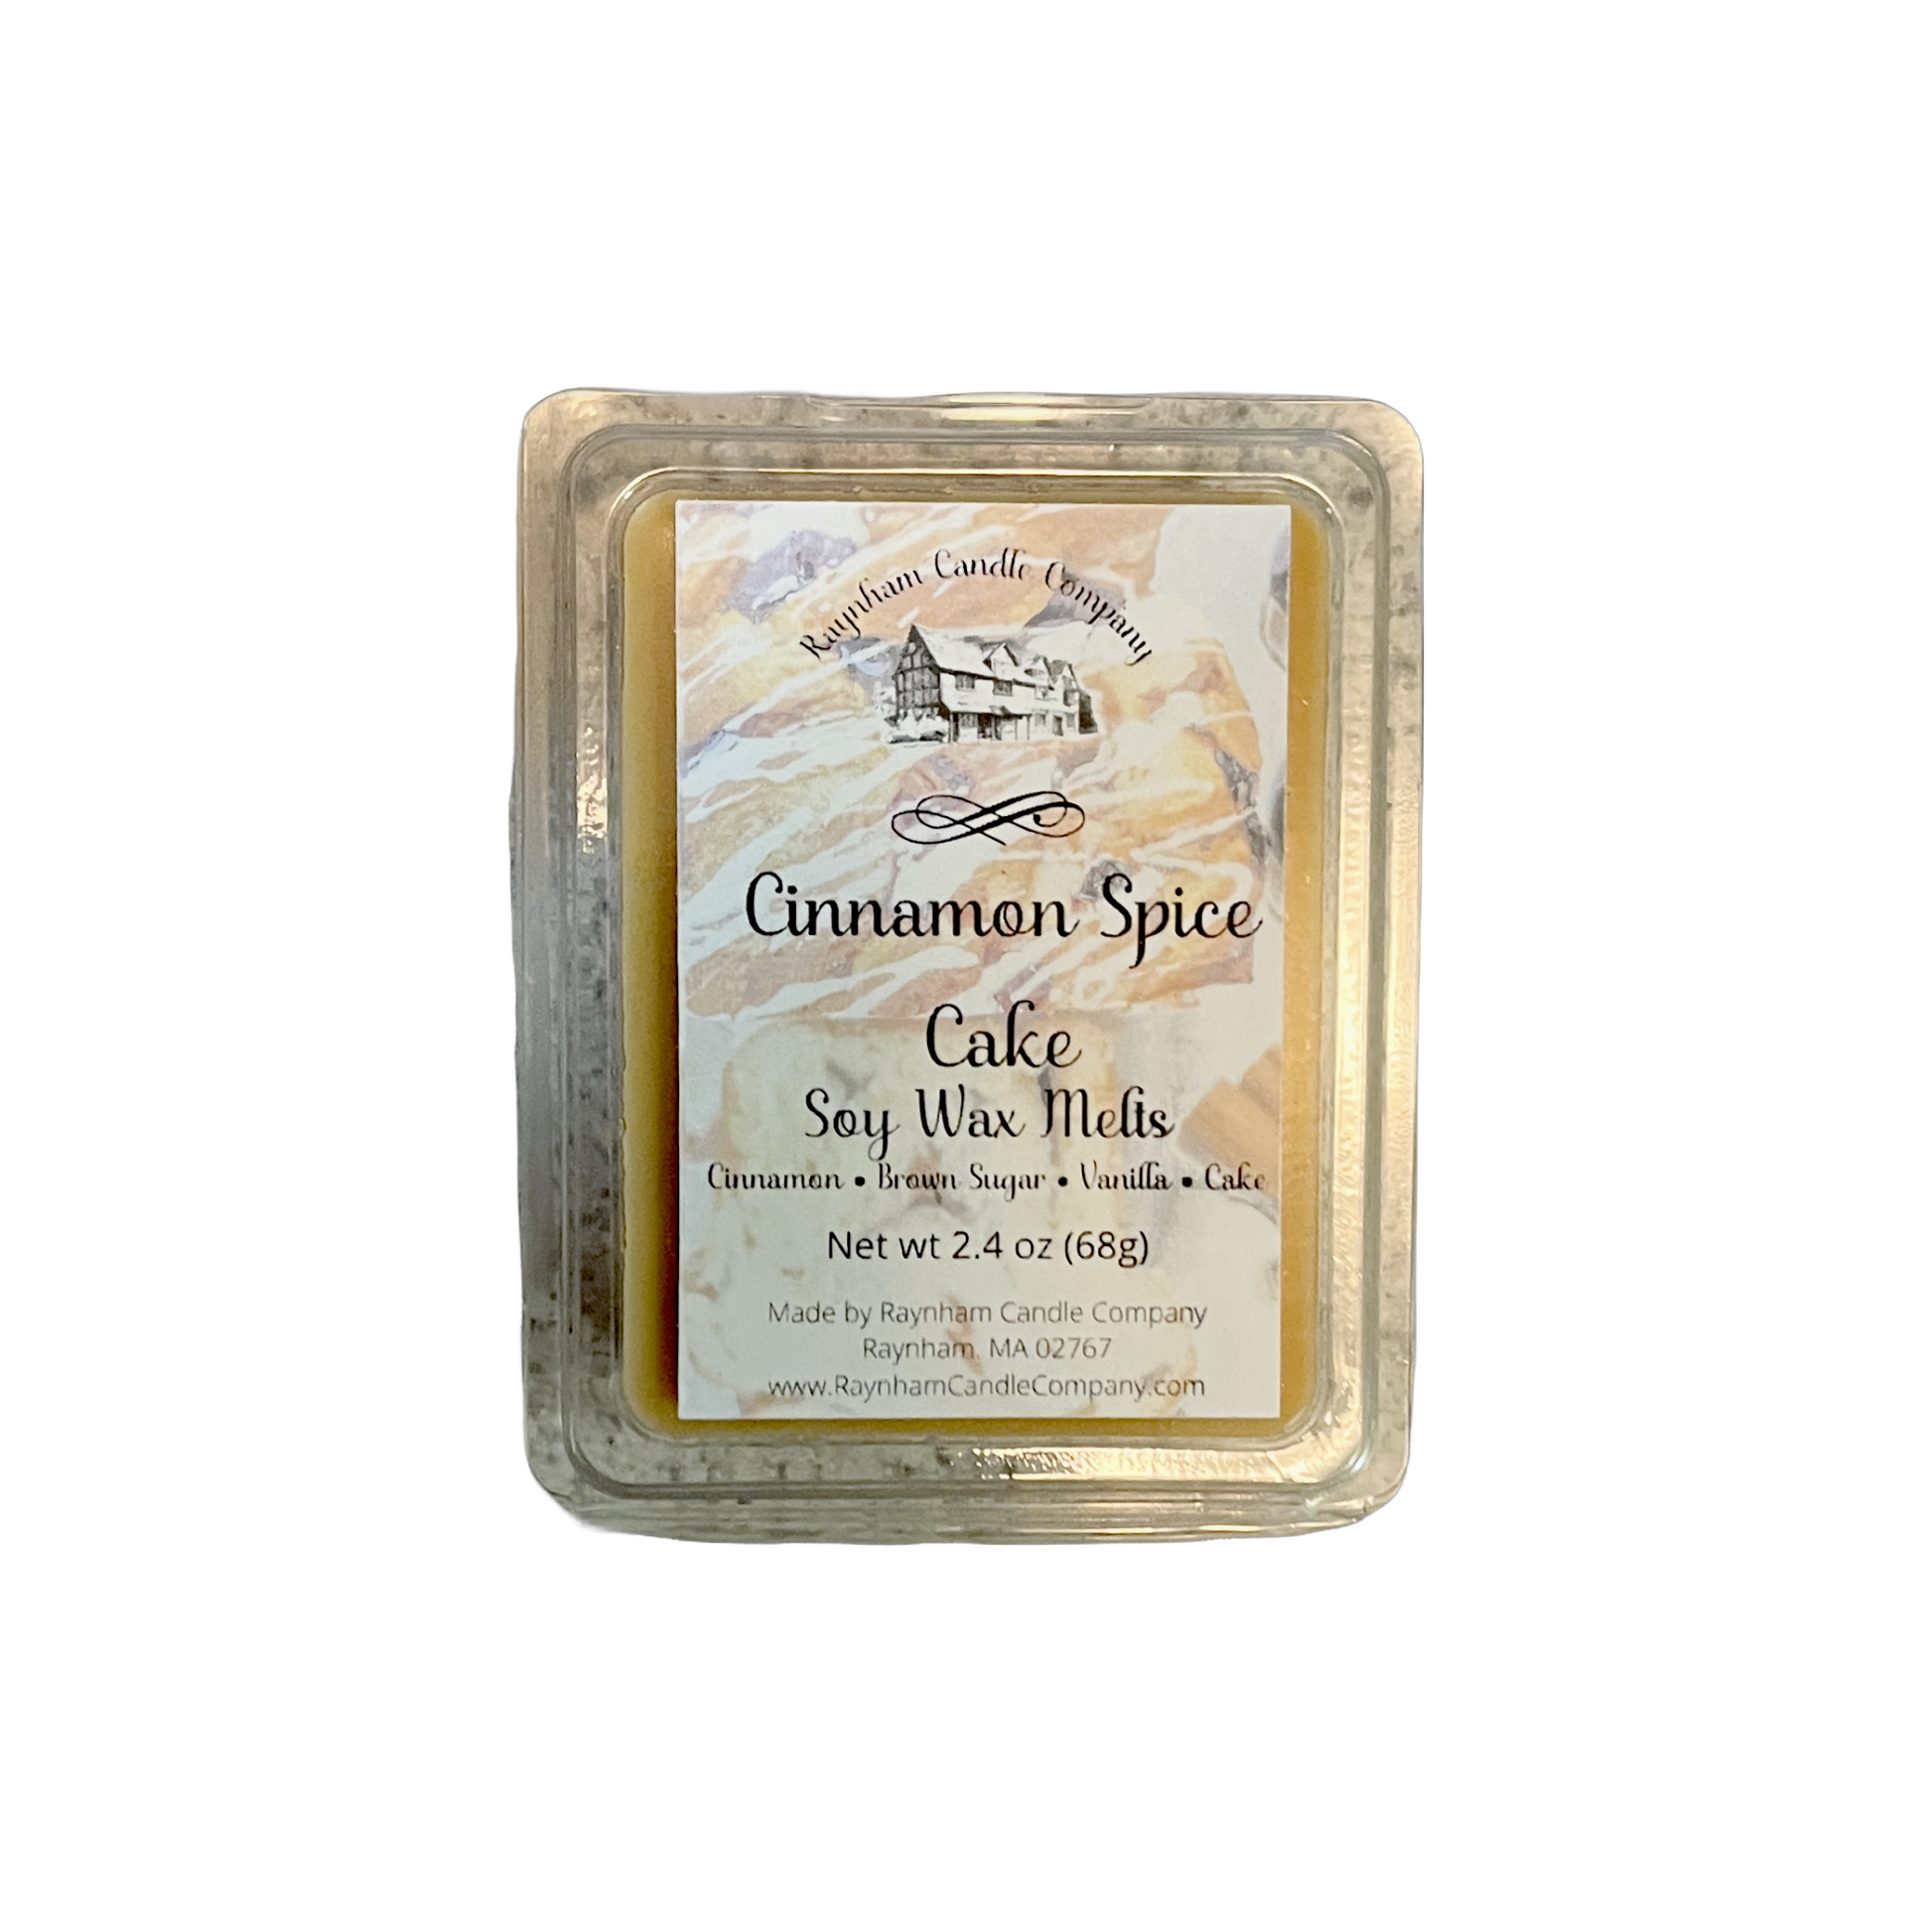 Cinnamon Spice Cake - Premium  from Raynham Candle Company  - Just $5! Shop now at Raynham Candle Company 